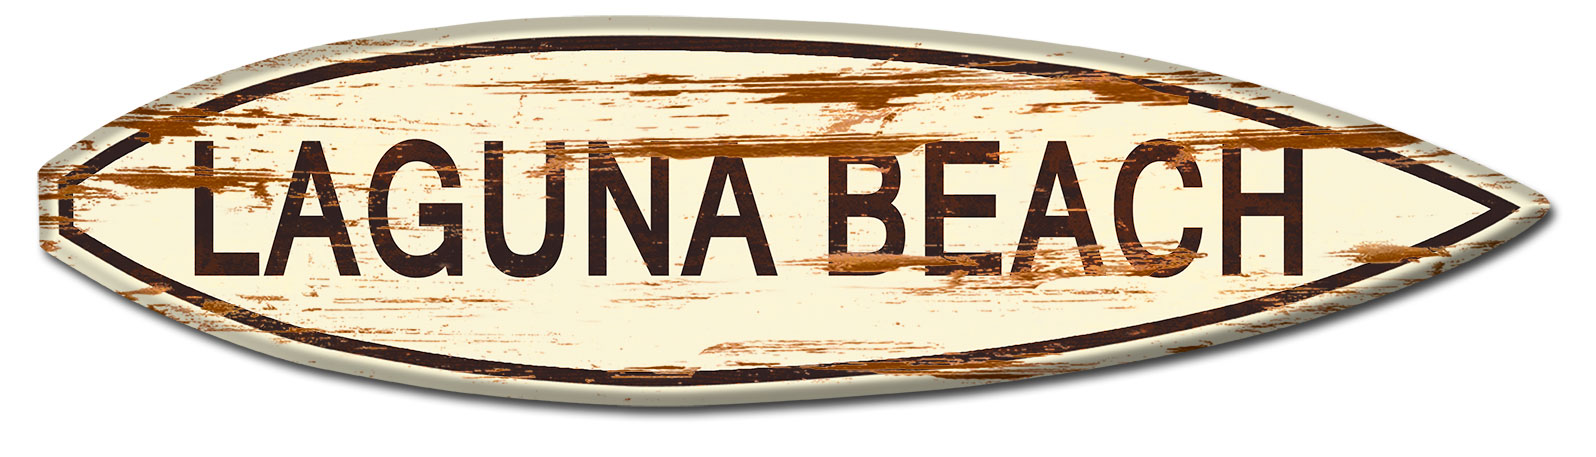 Laguna Beach Surf Board Wood Print Vintage Sign